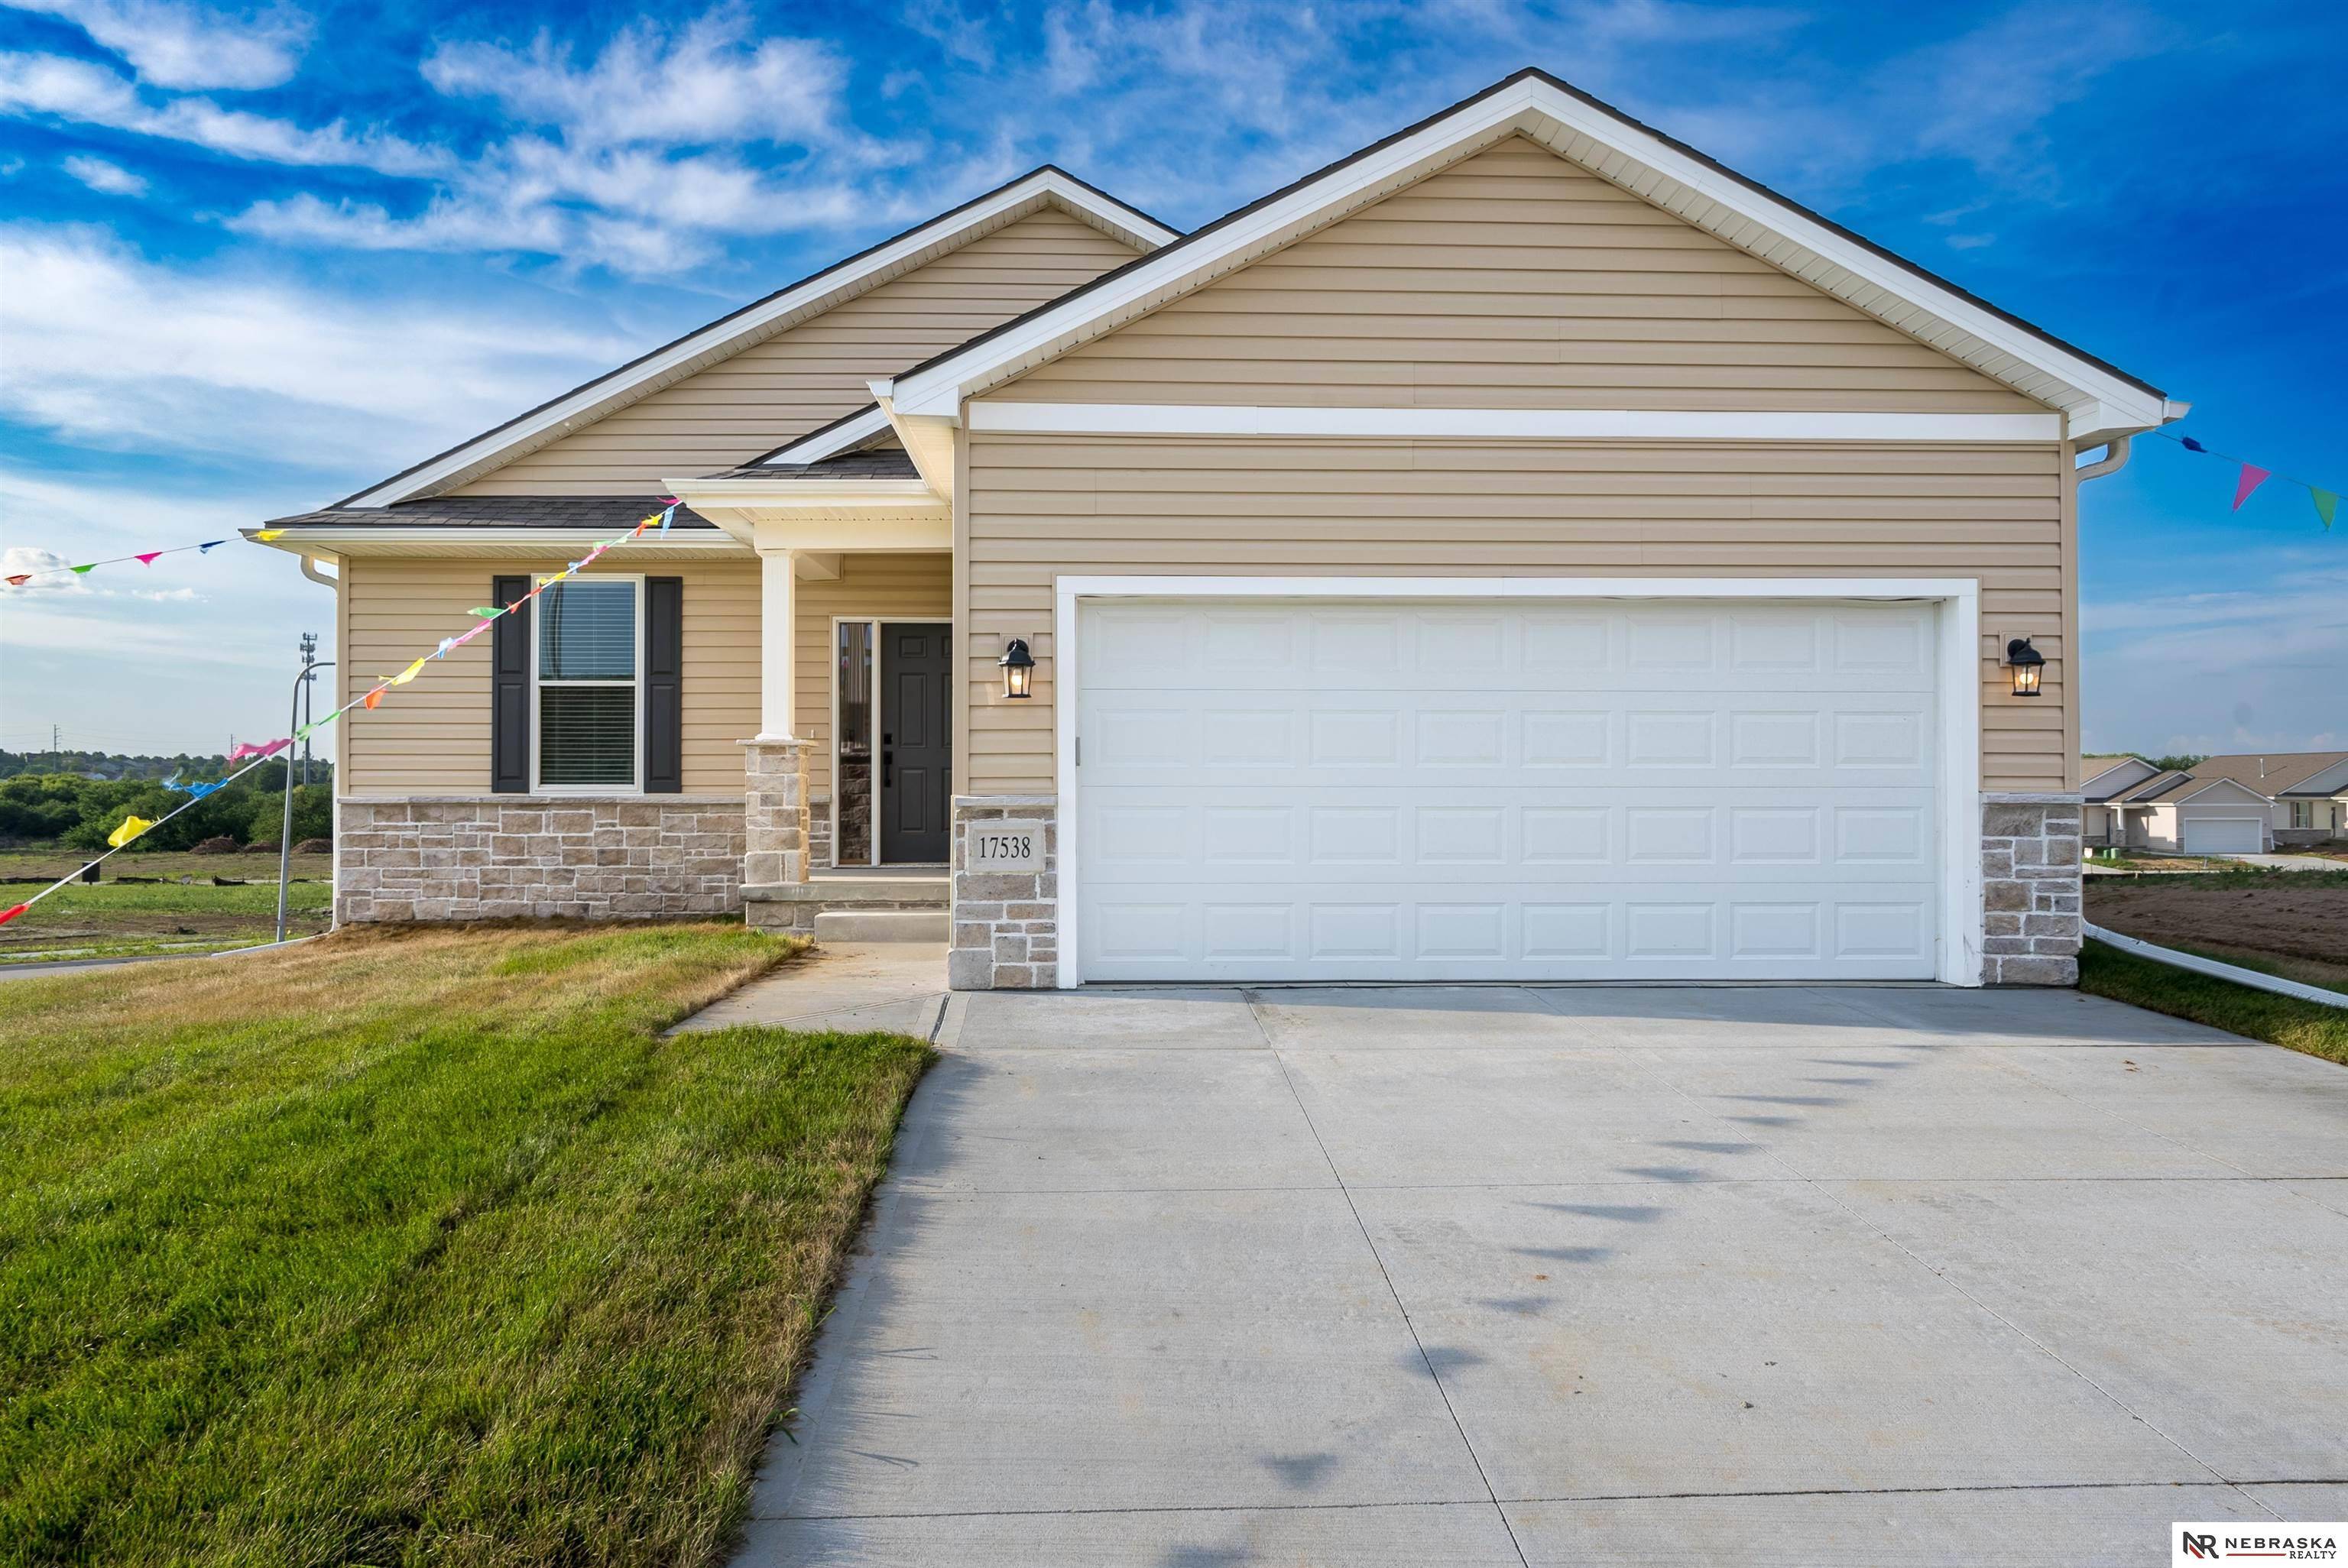 Homes for sale - 17509 Robin Drive, Omaha, NE 68136 – MLS#22217772 